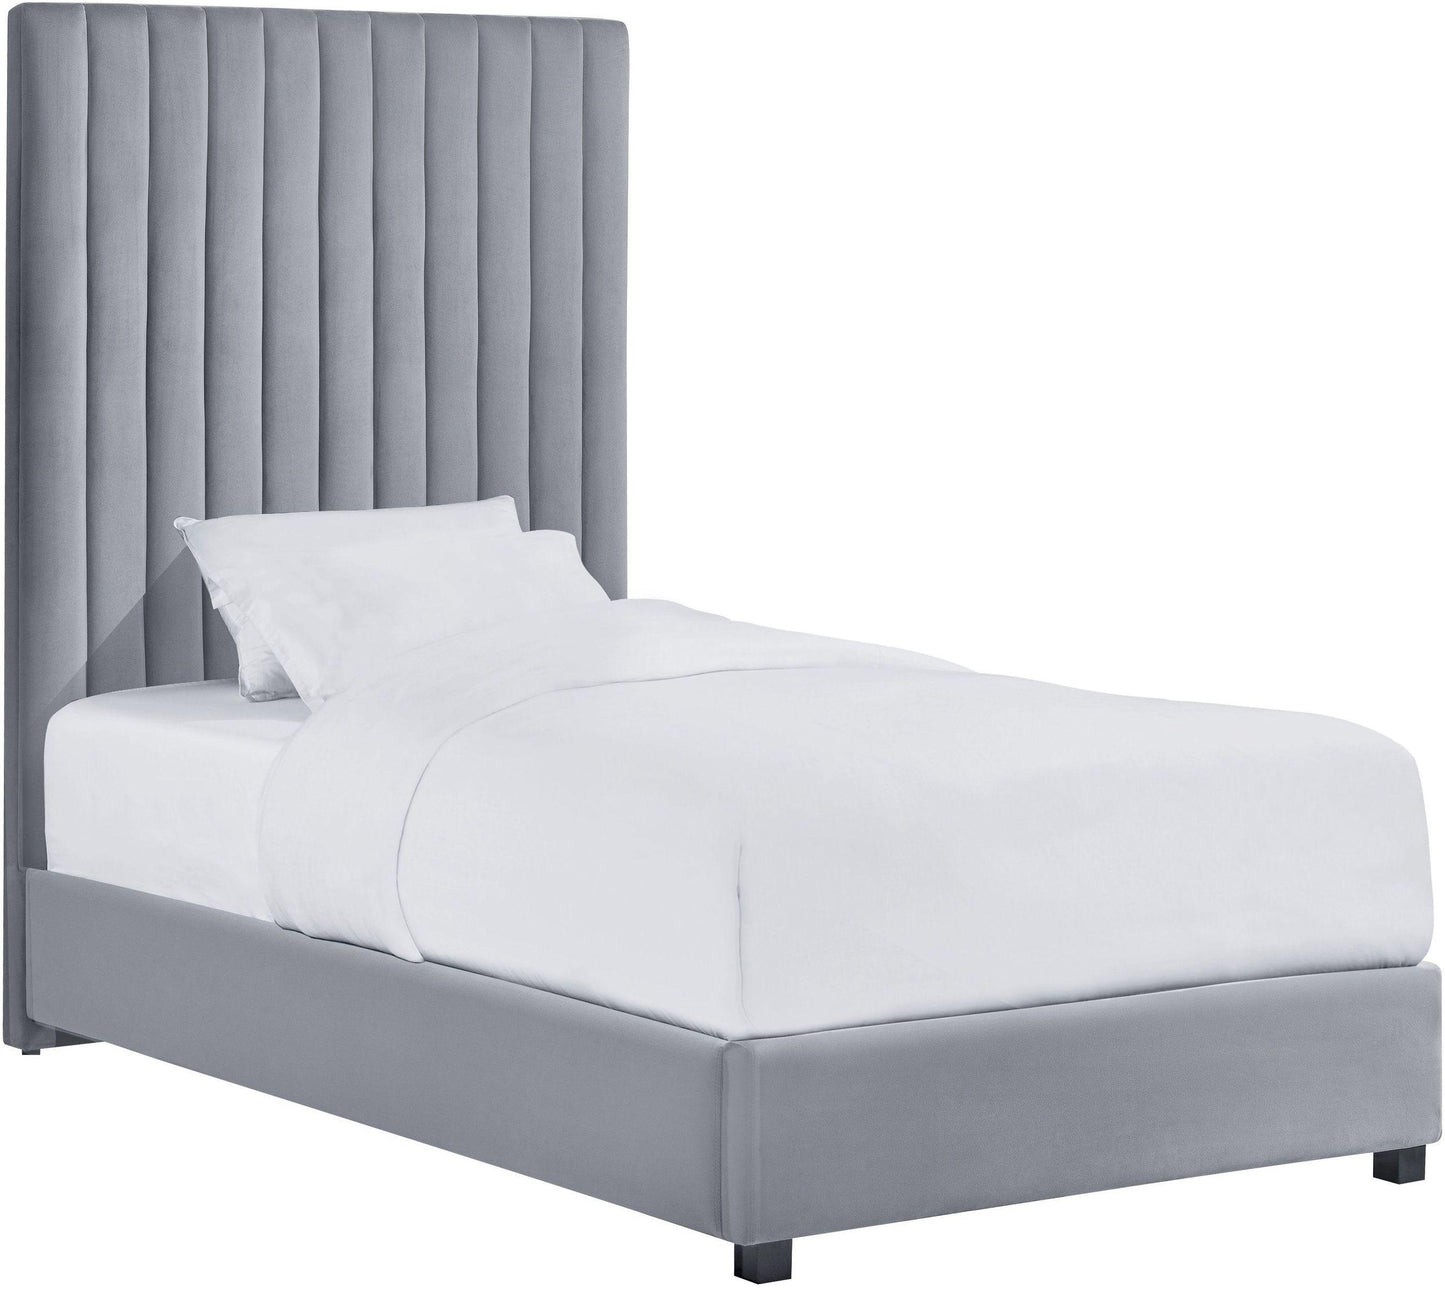 Tov Furniture Arabelle Grey Bed Twin